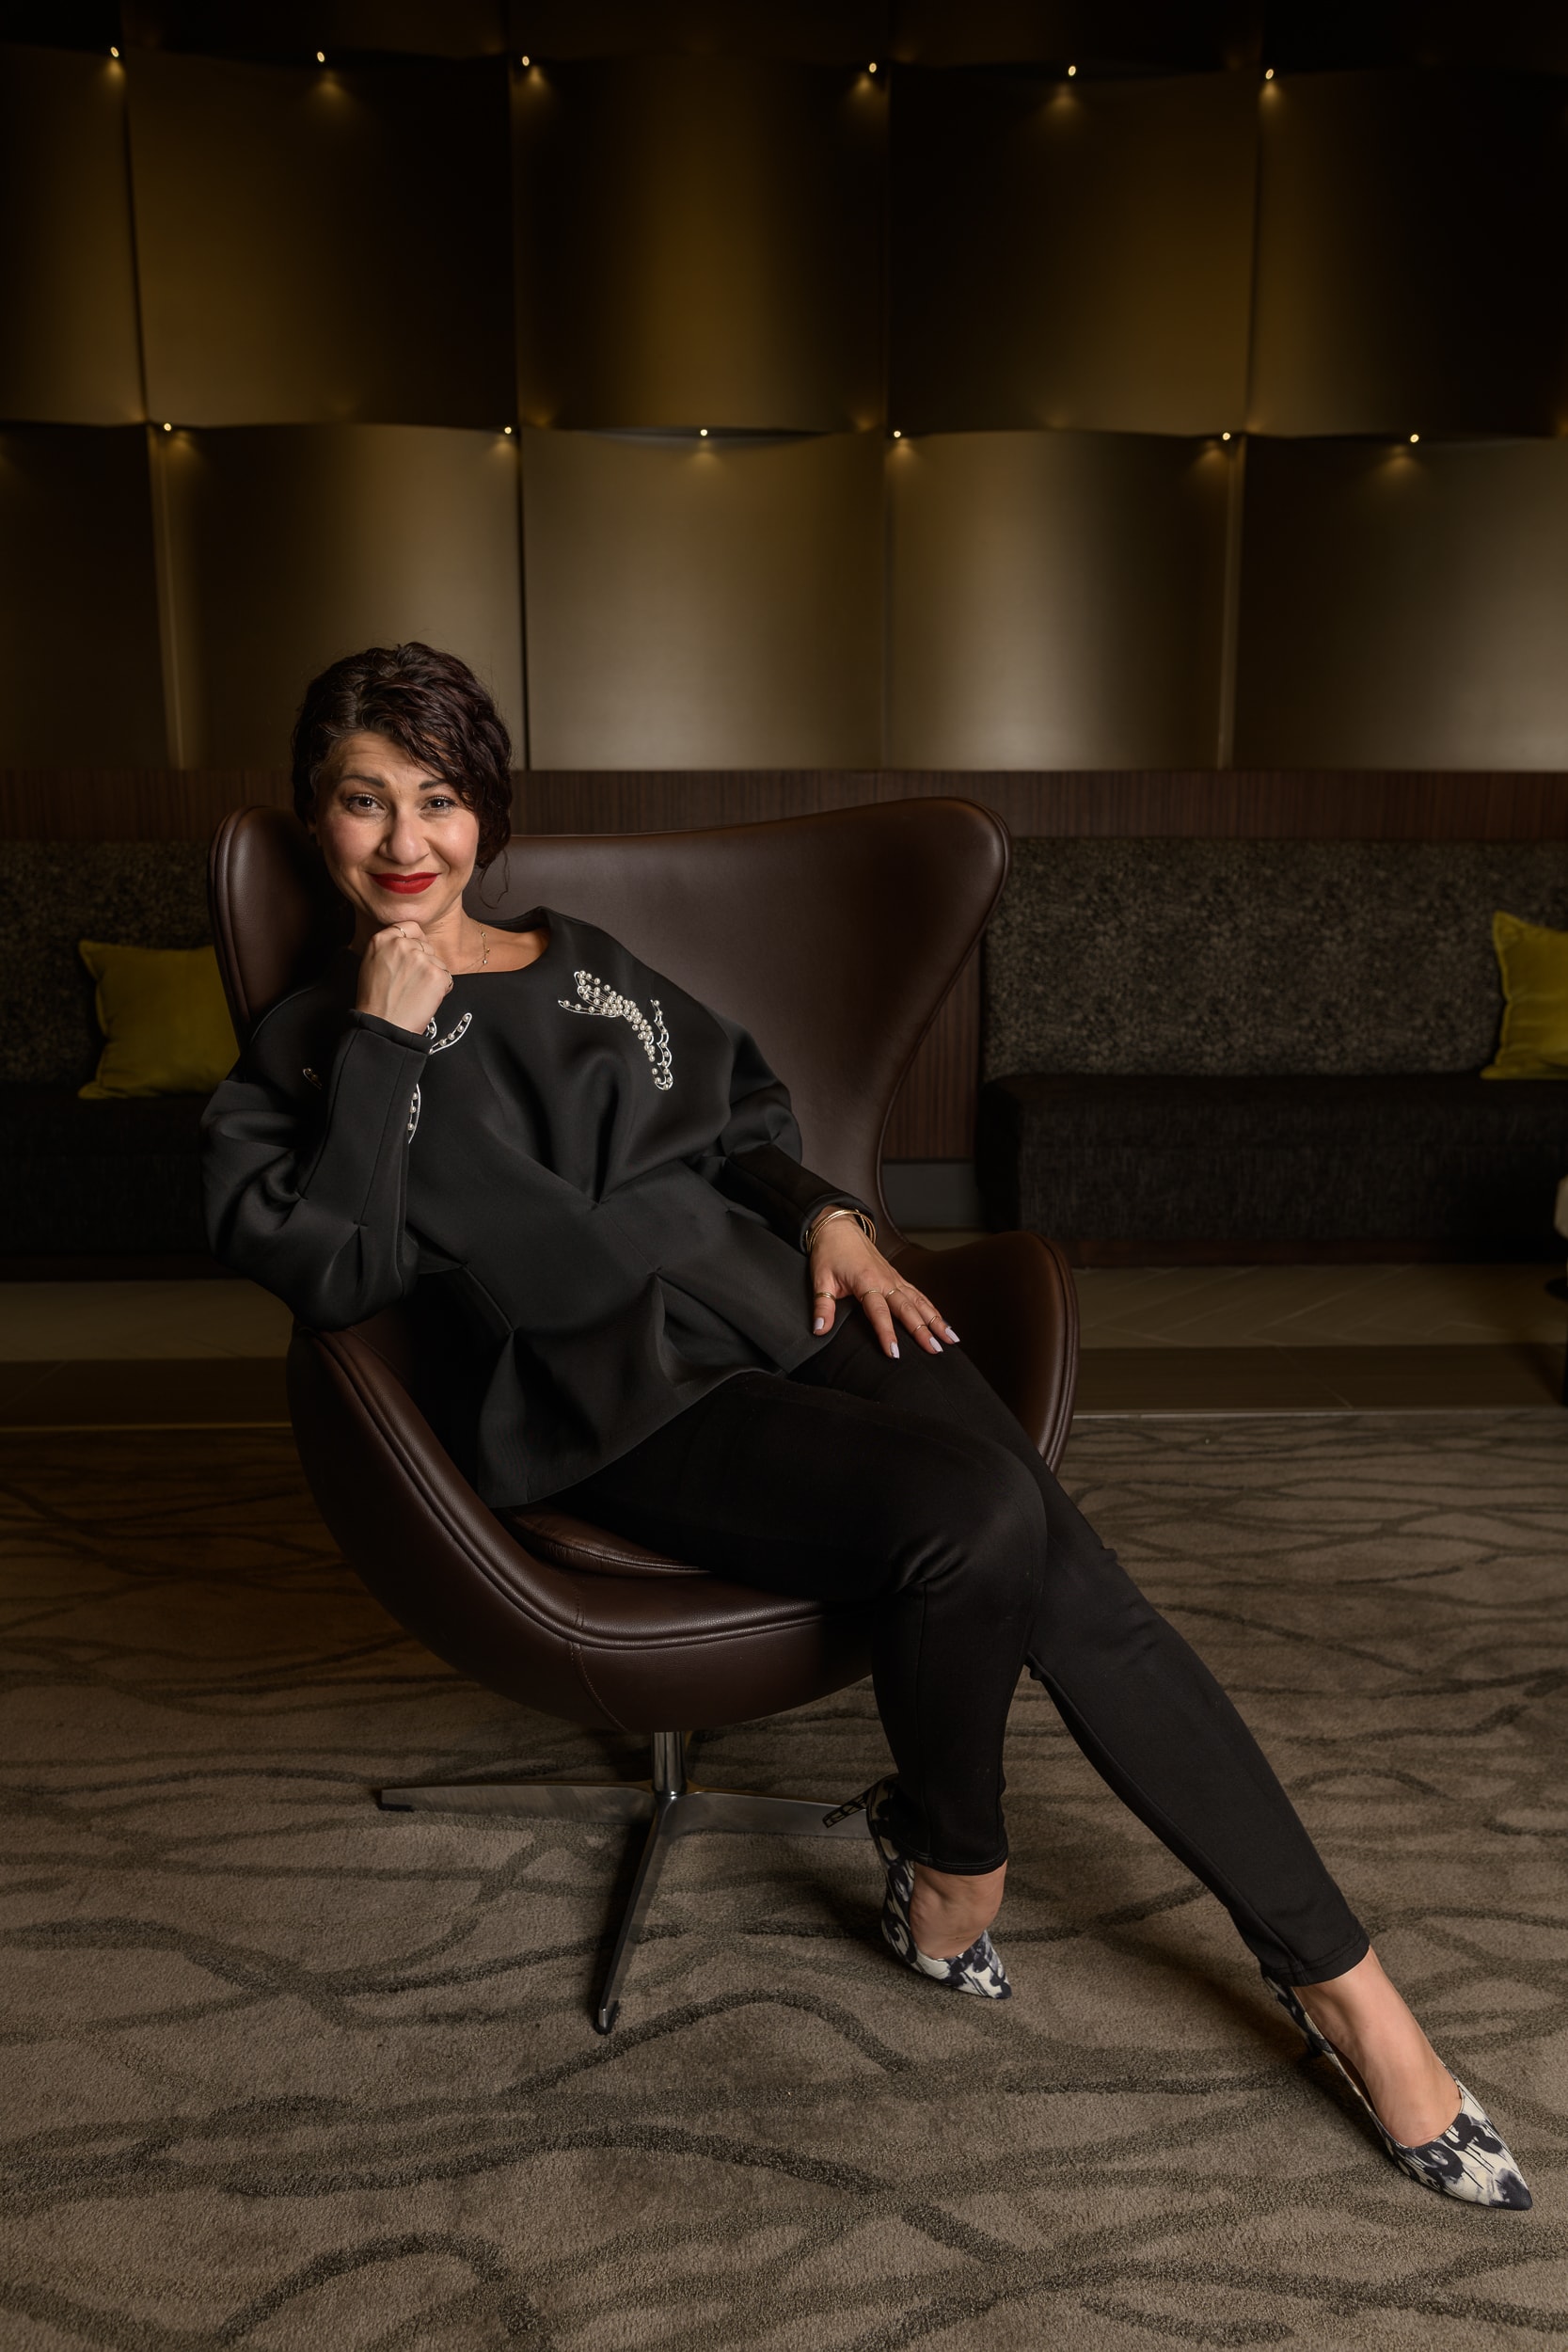 Sahar CEO power portrait leather chair metallic walls